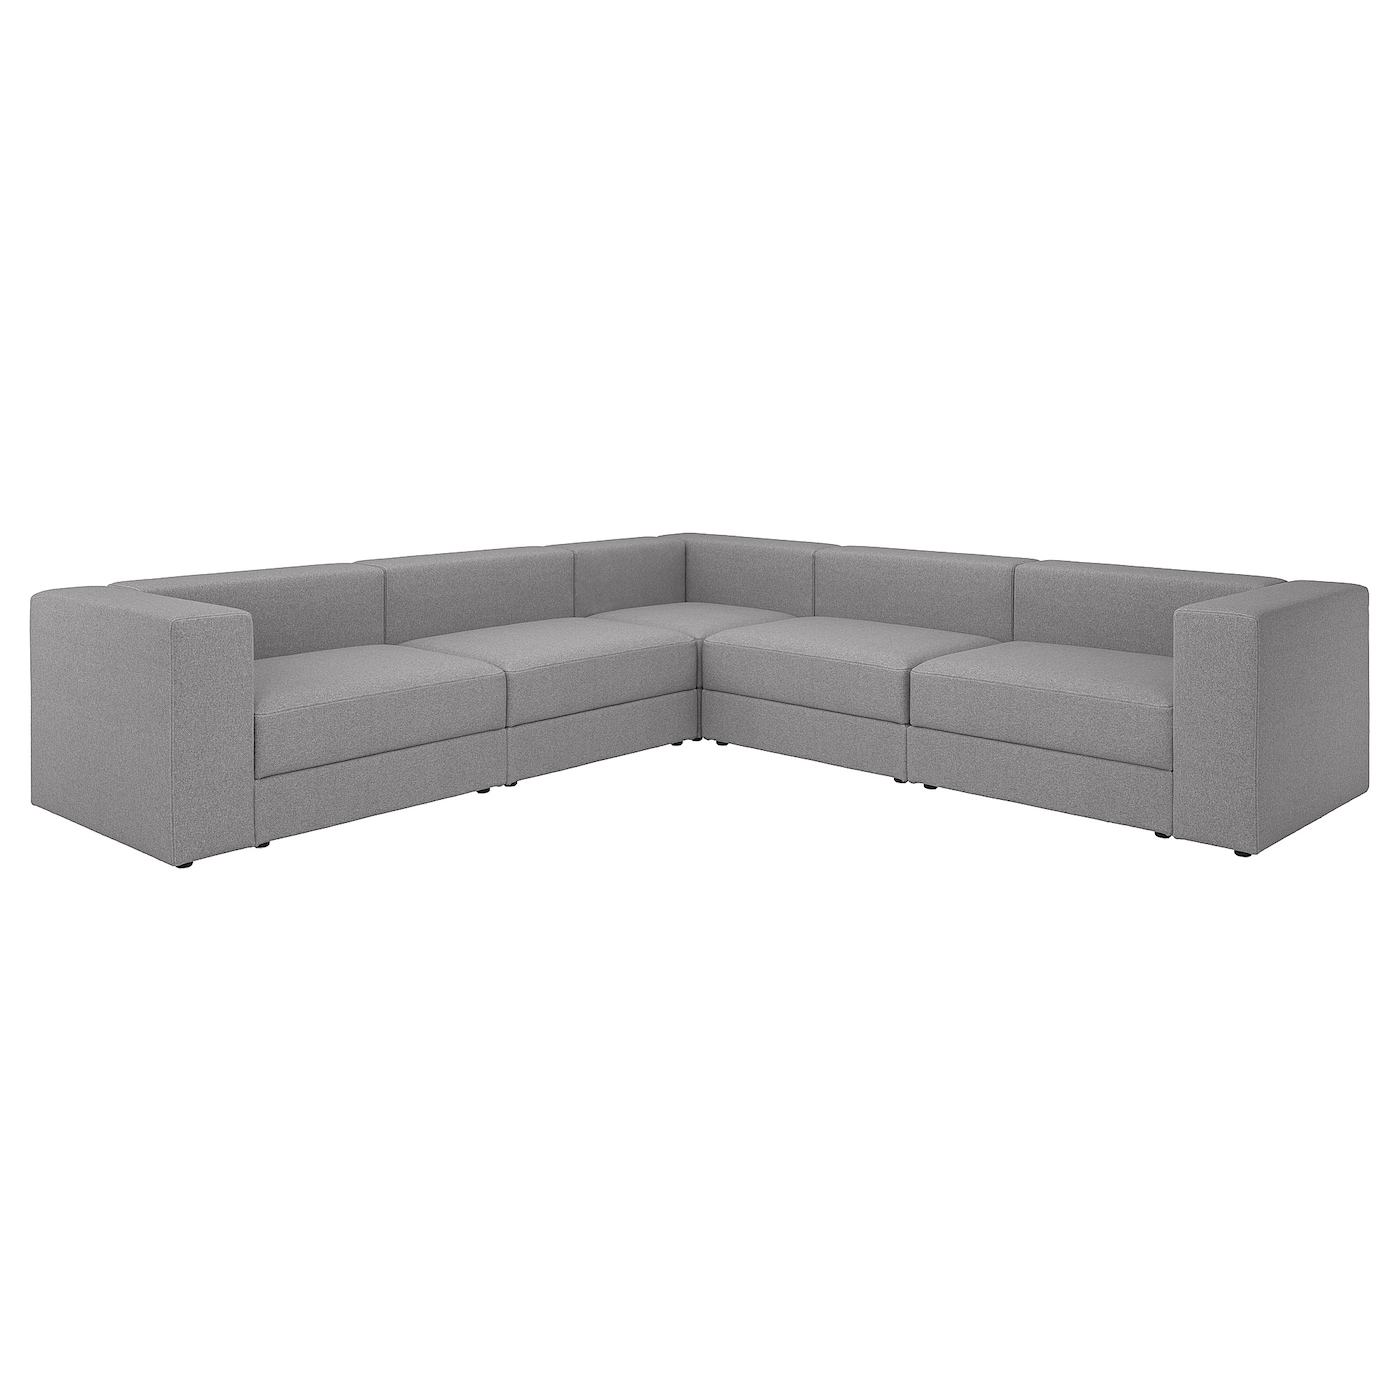 6-местный угловой диван - IKEA JÄTTEBO/JATTEBO, 71x95x310см, серый, ЙЕТТЕБО ИКЕА